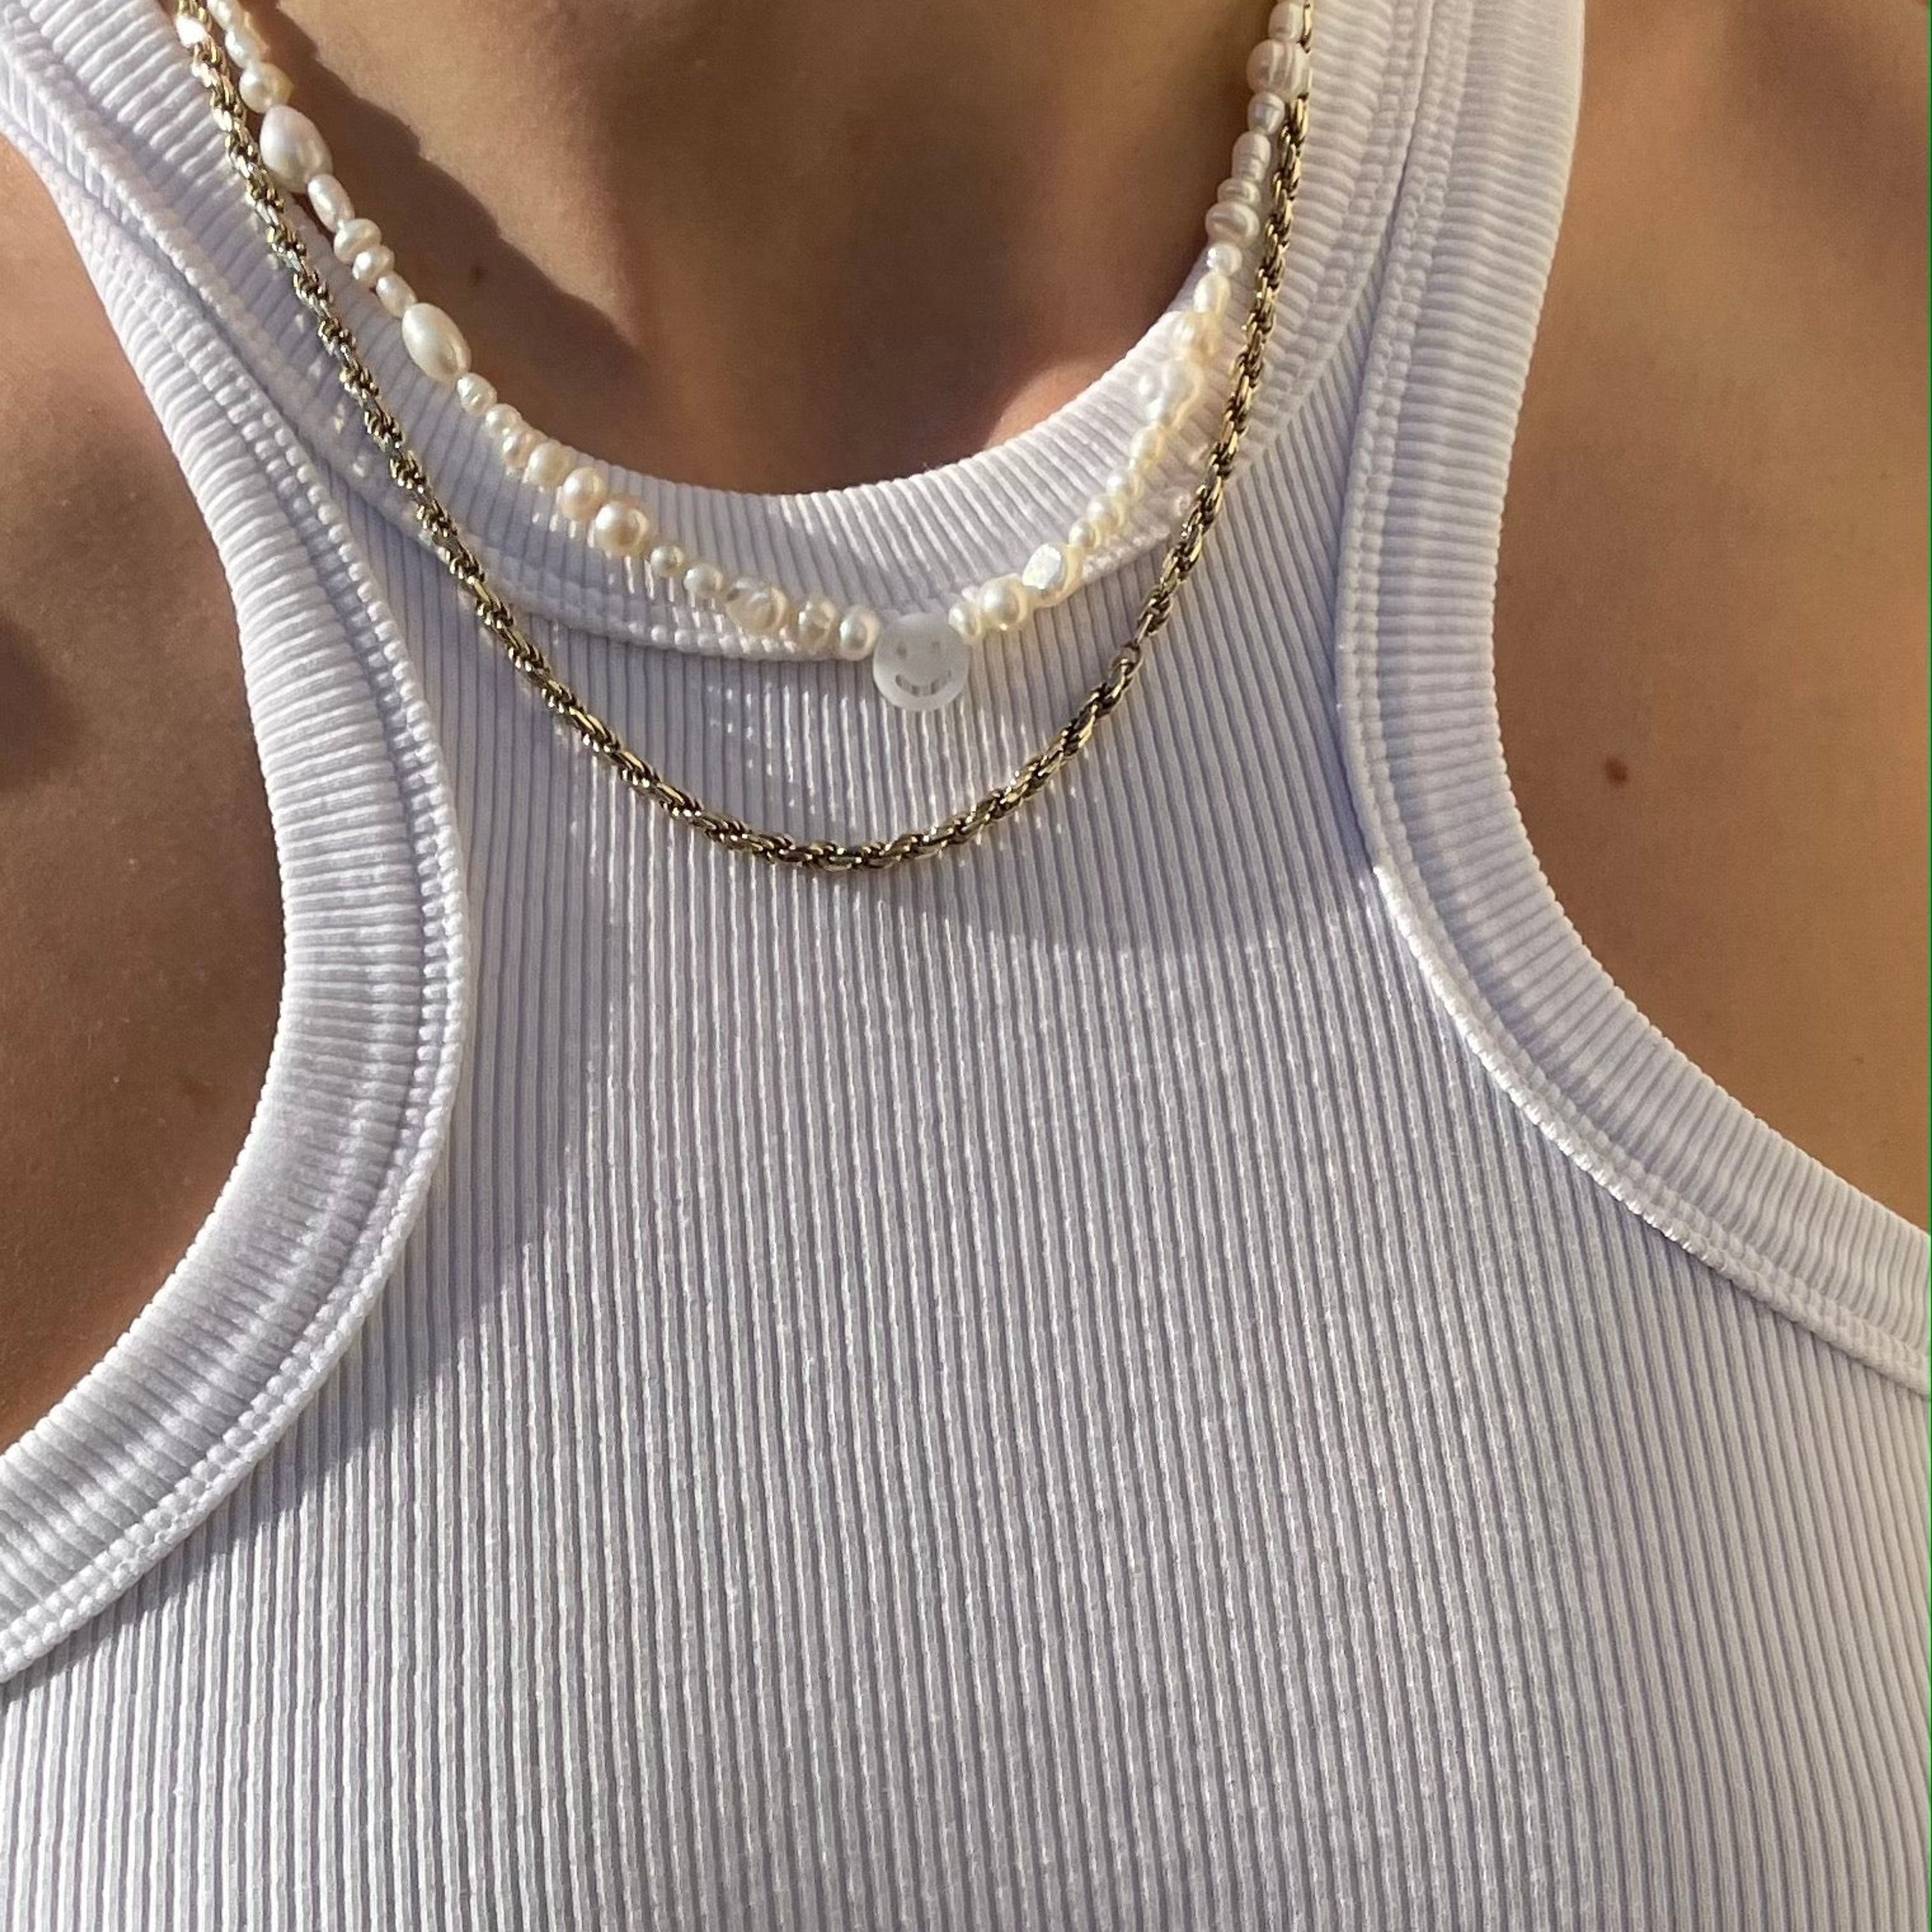 Billie necklace